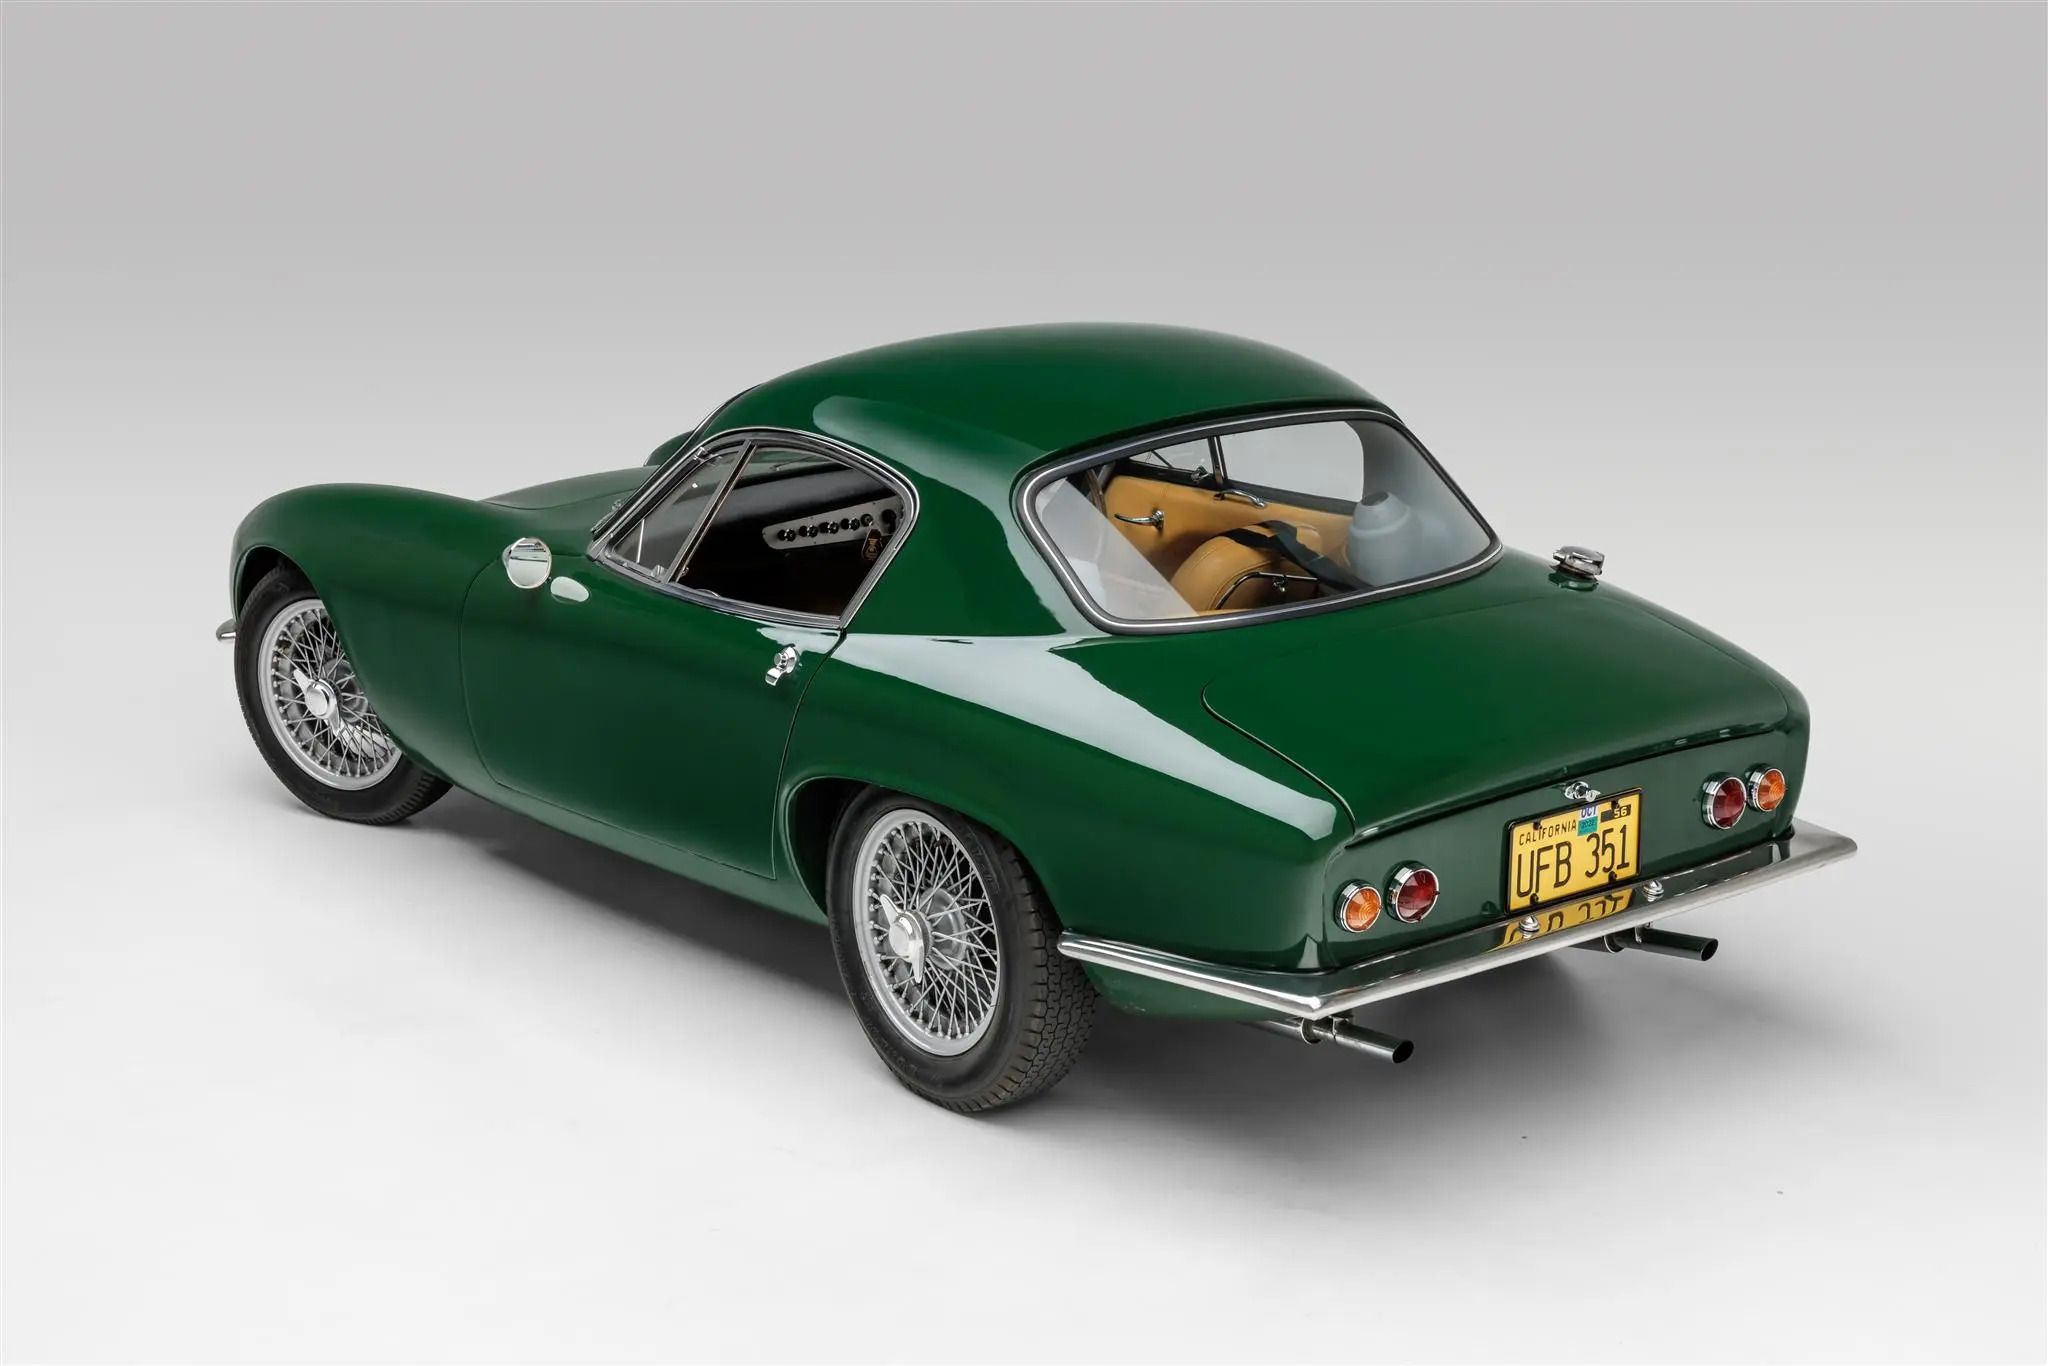 1960 Lotus Elite Series I Auction Rear Quarter View